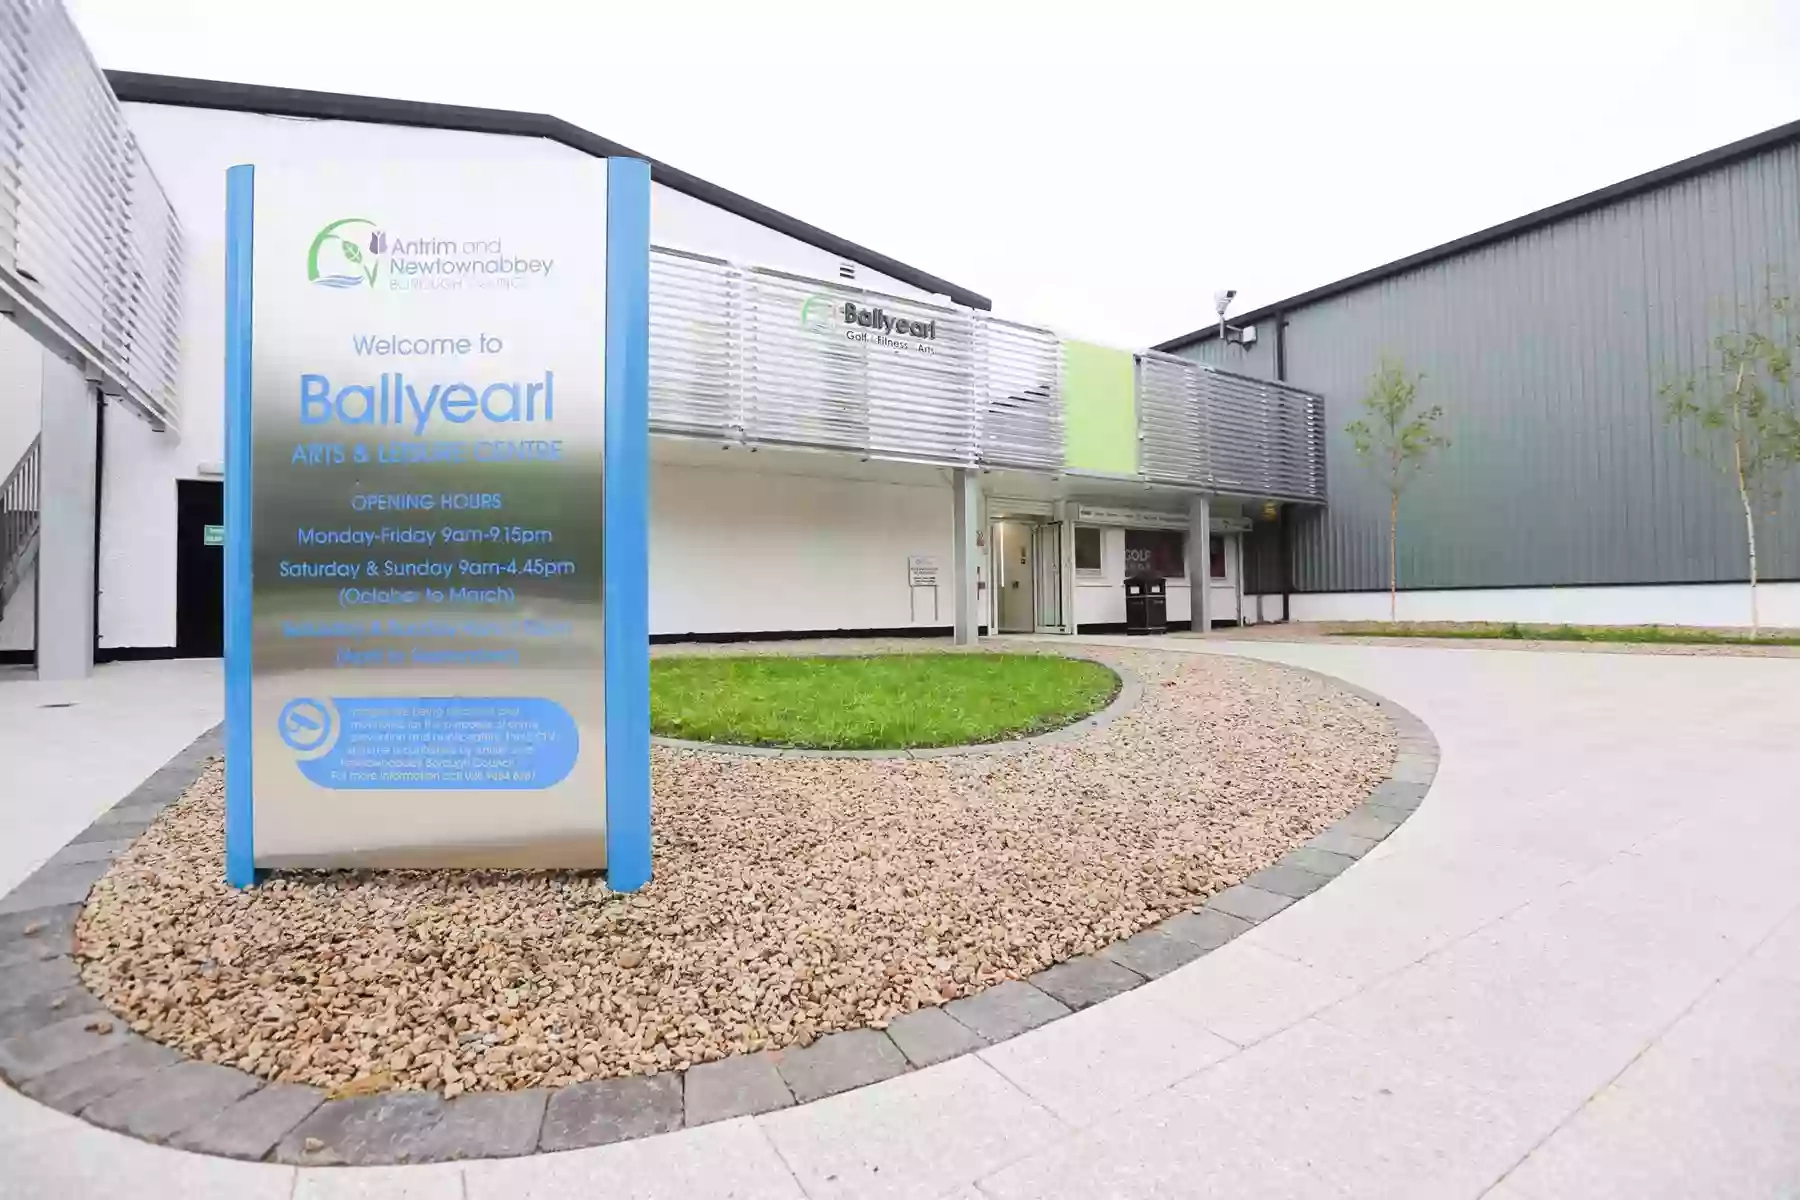 Ballyearl Arts & Leisure Centre